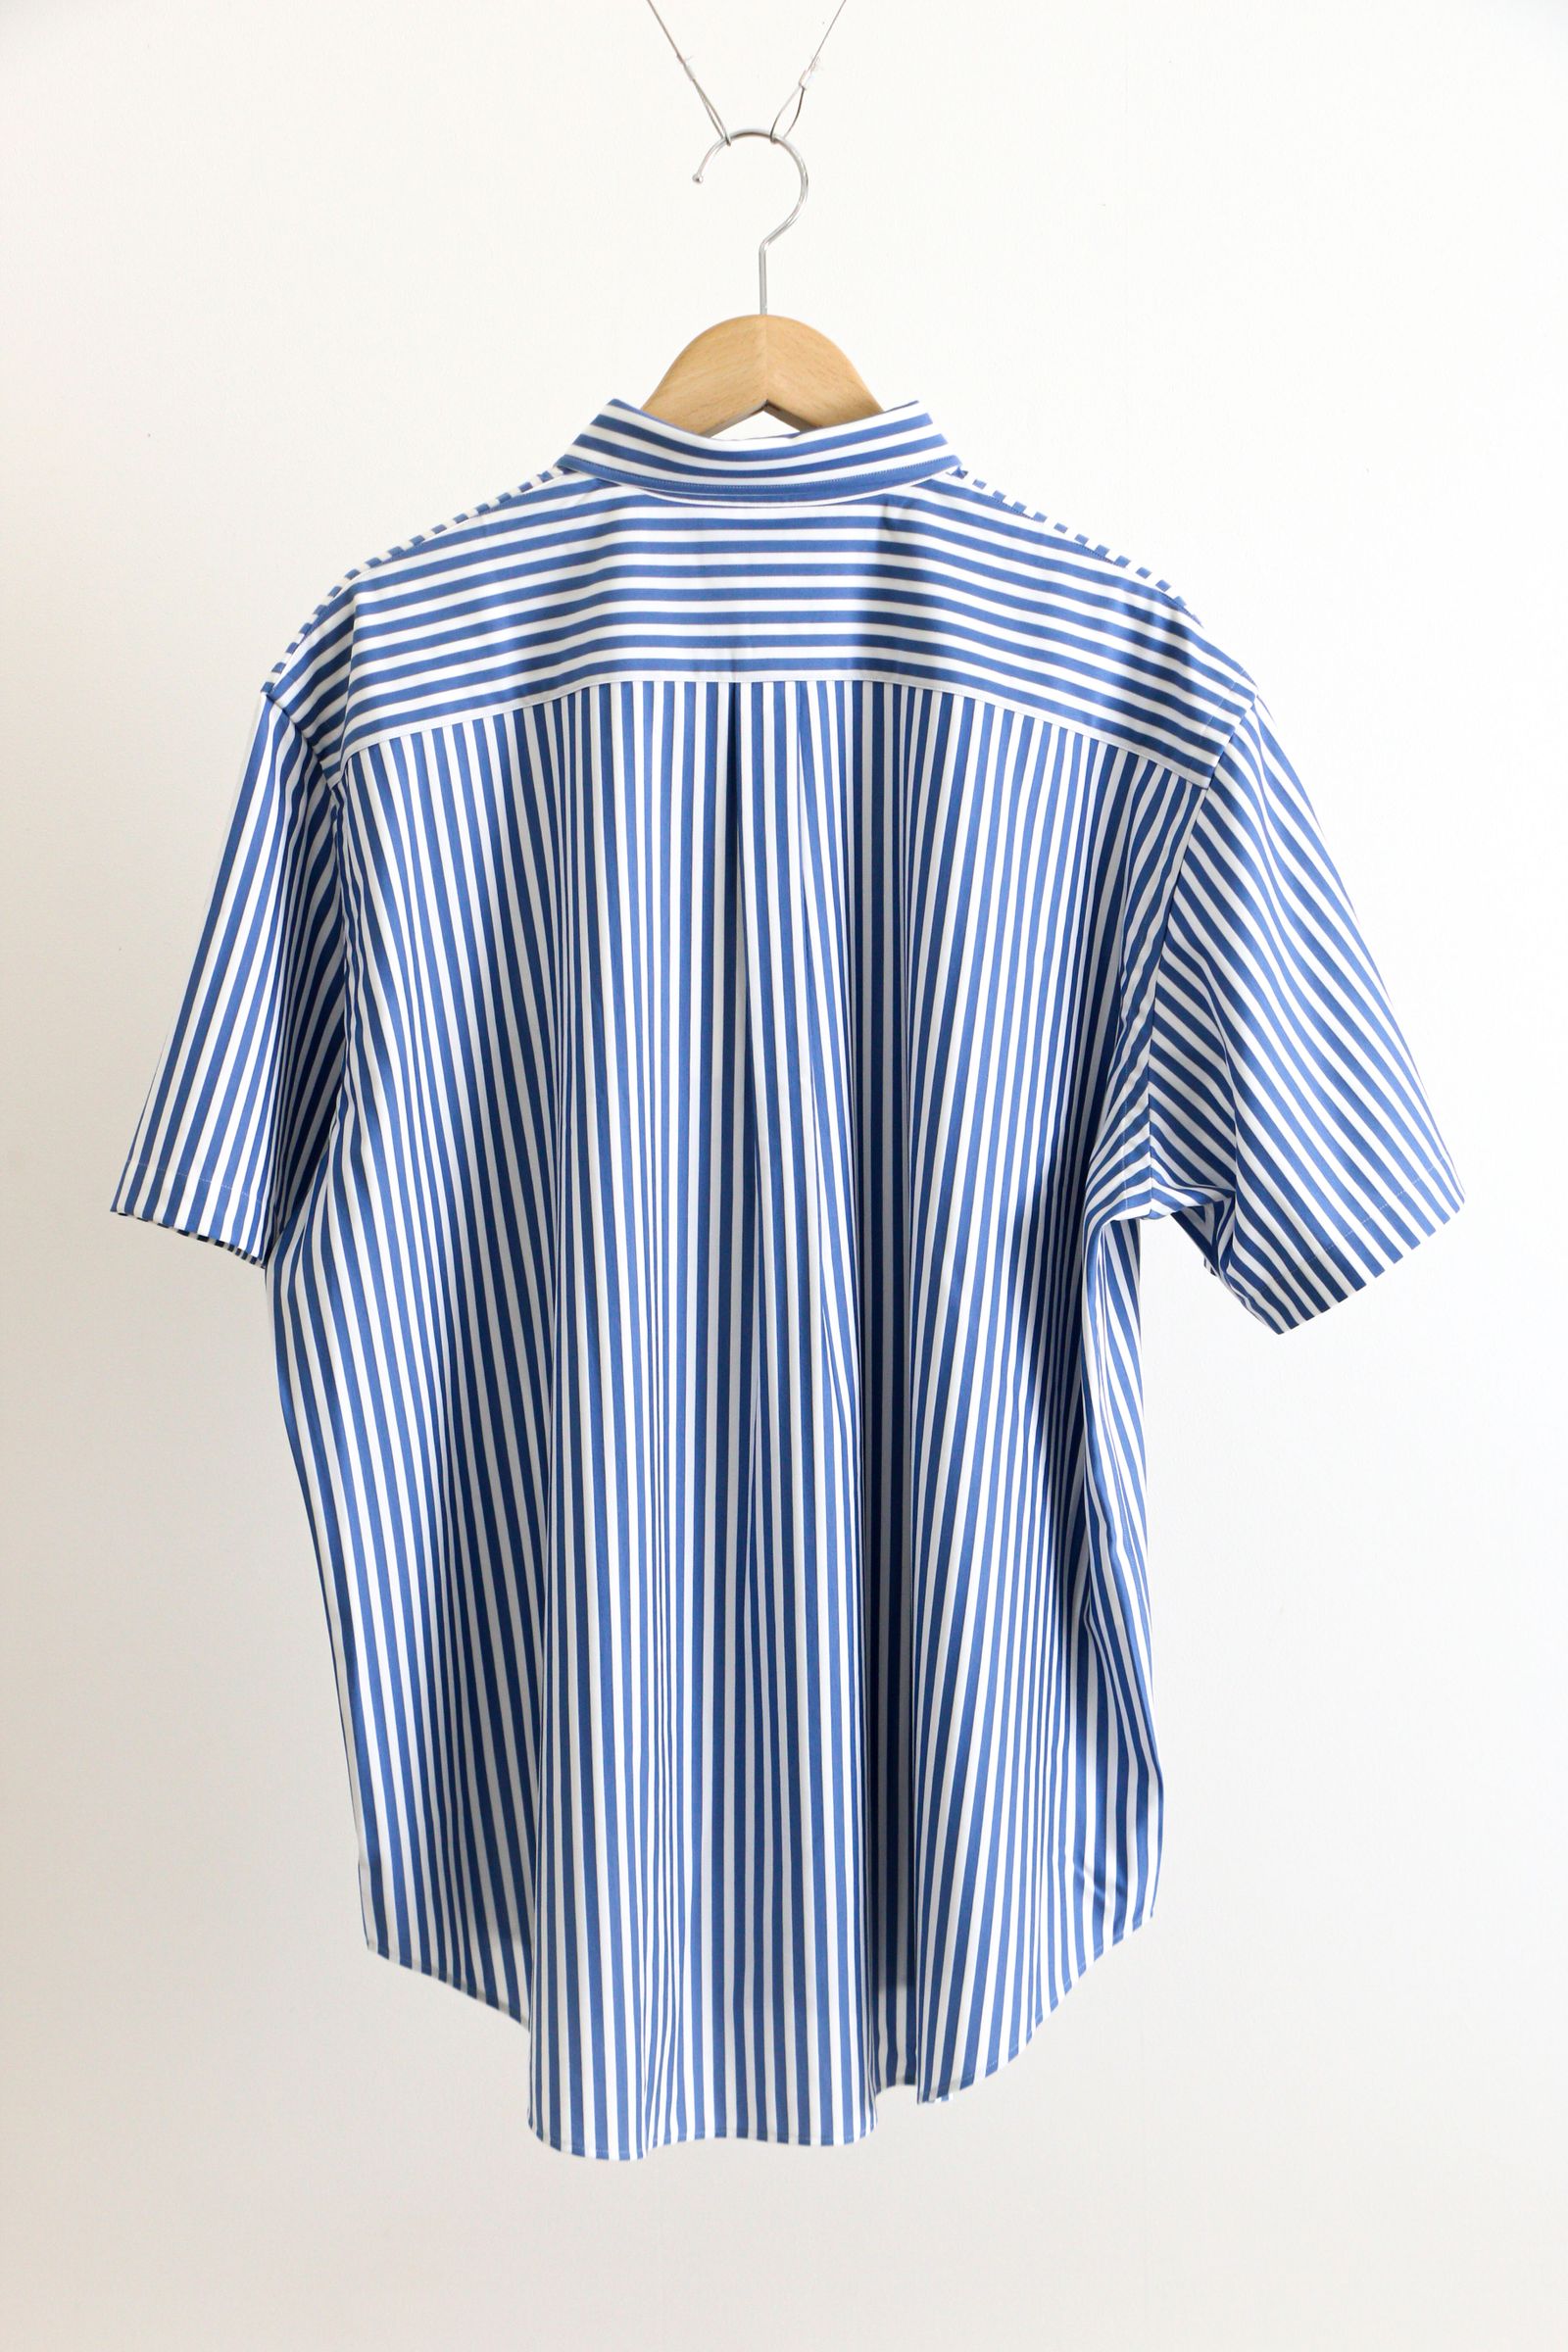 KANEMASA PHIL. - Royal Ox Dress Jersey Short Sleeve Shirt